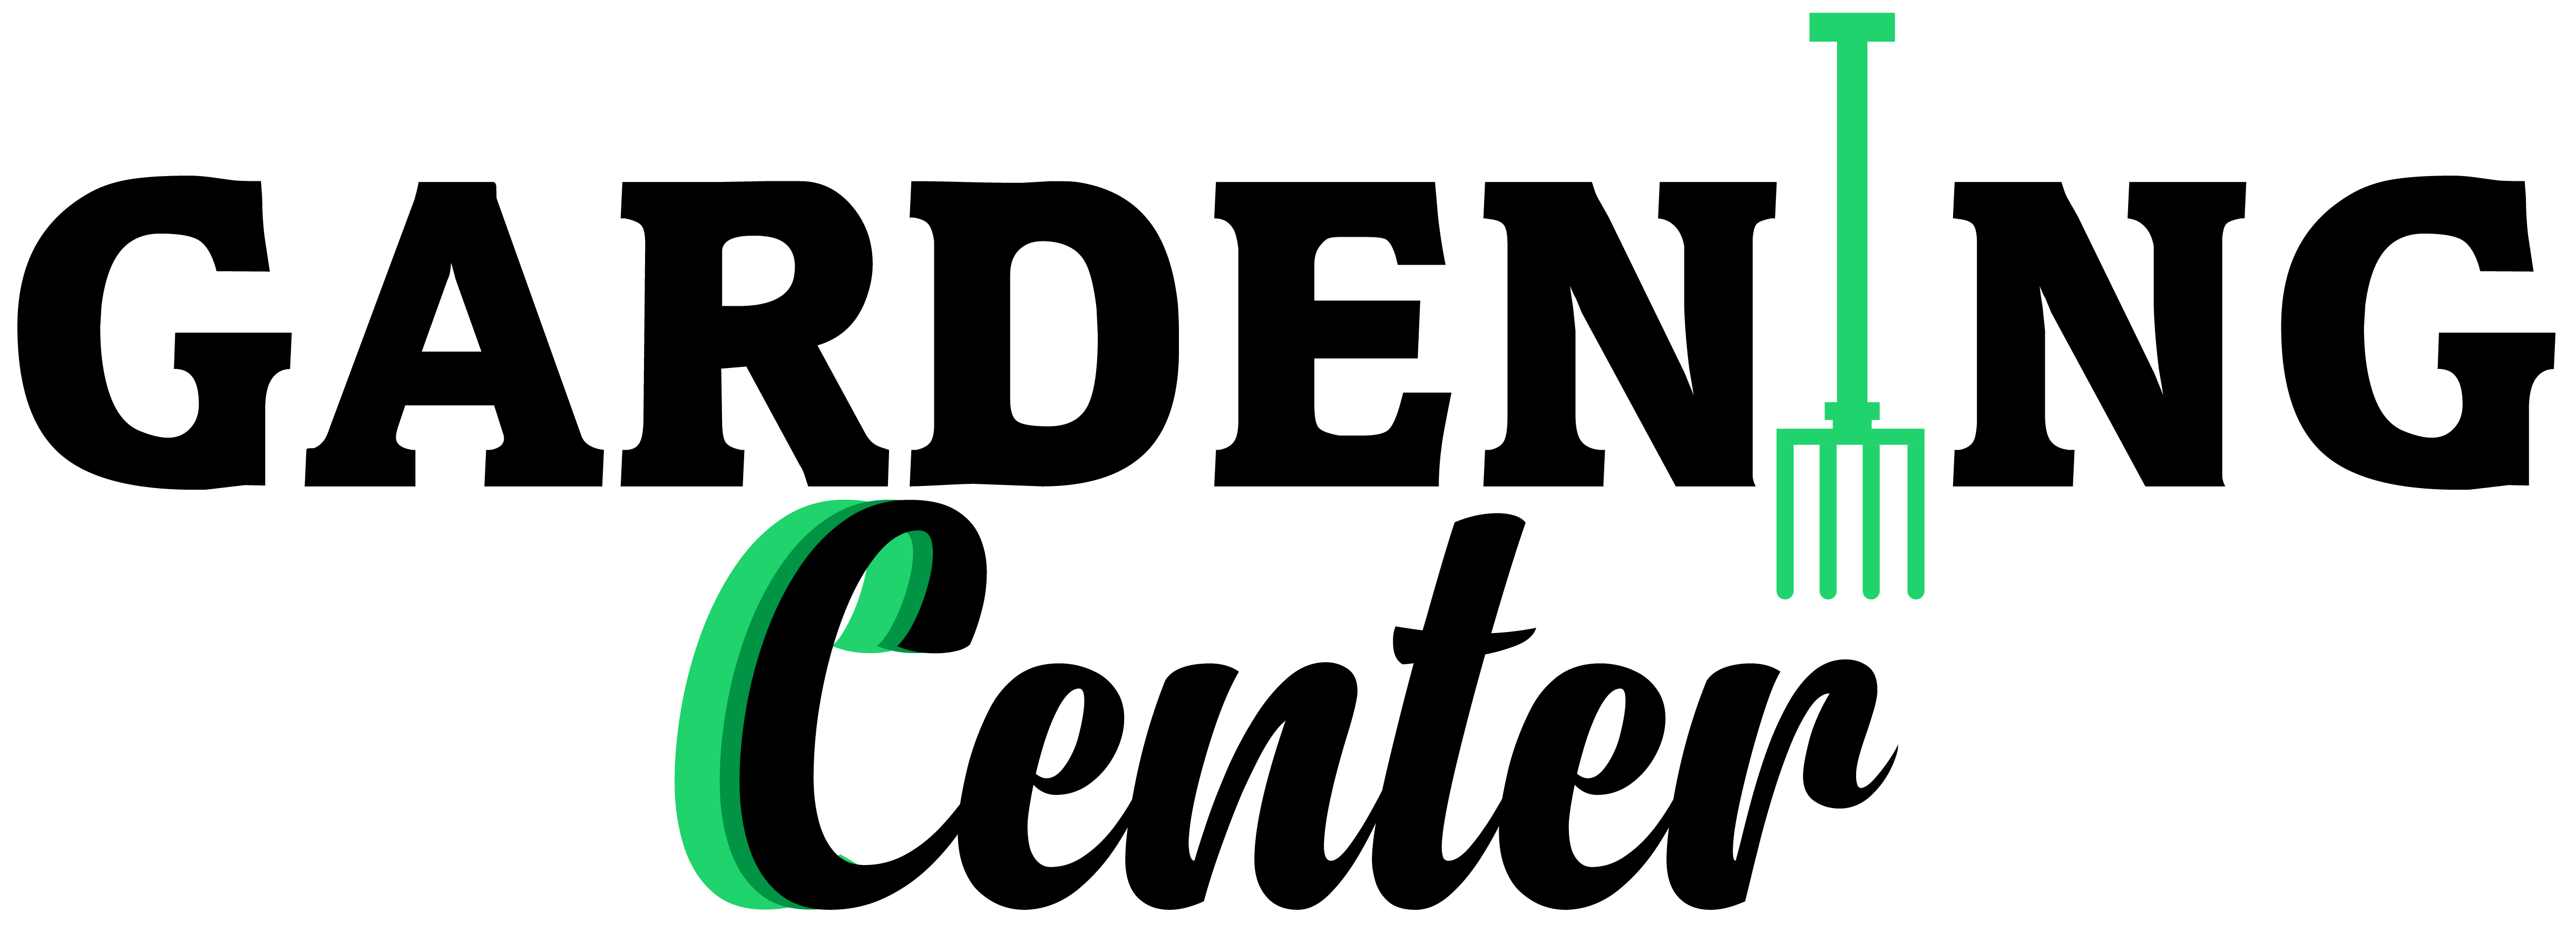 Gardeningcenter